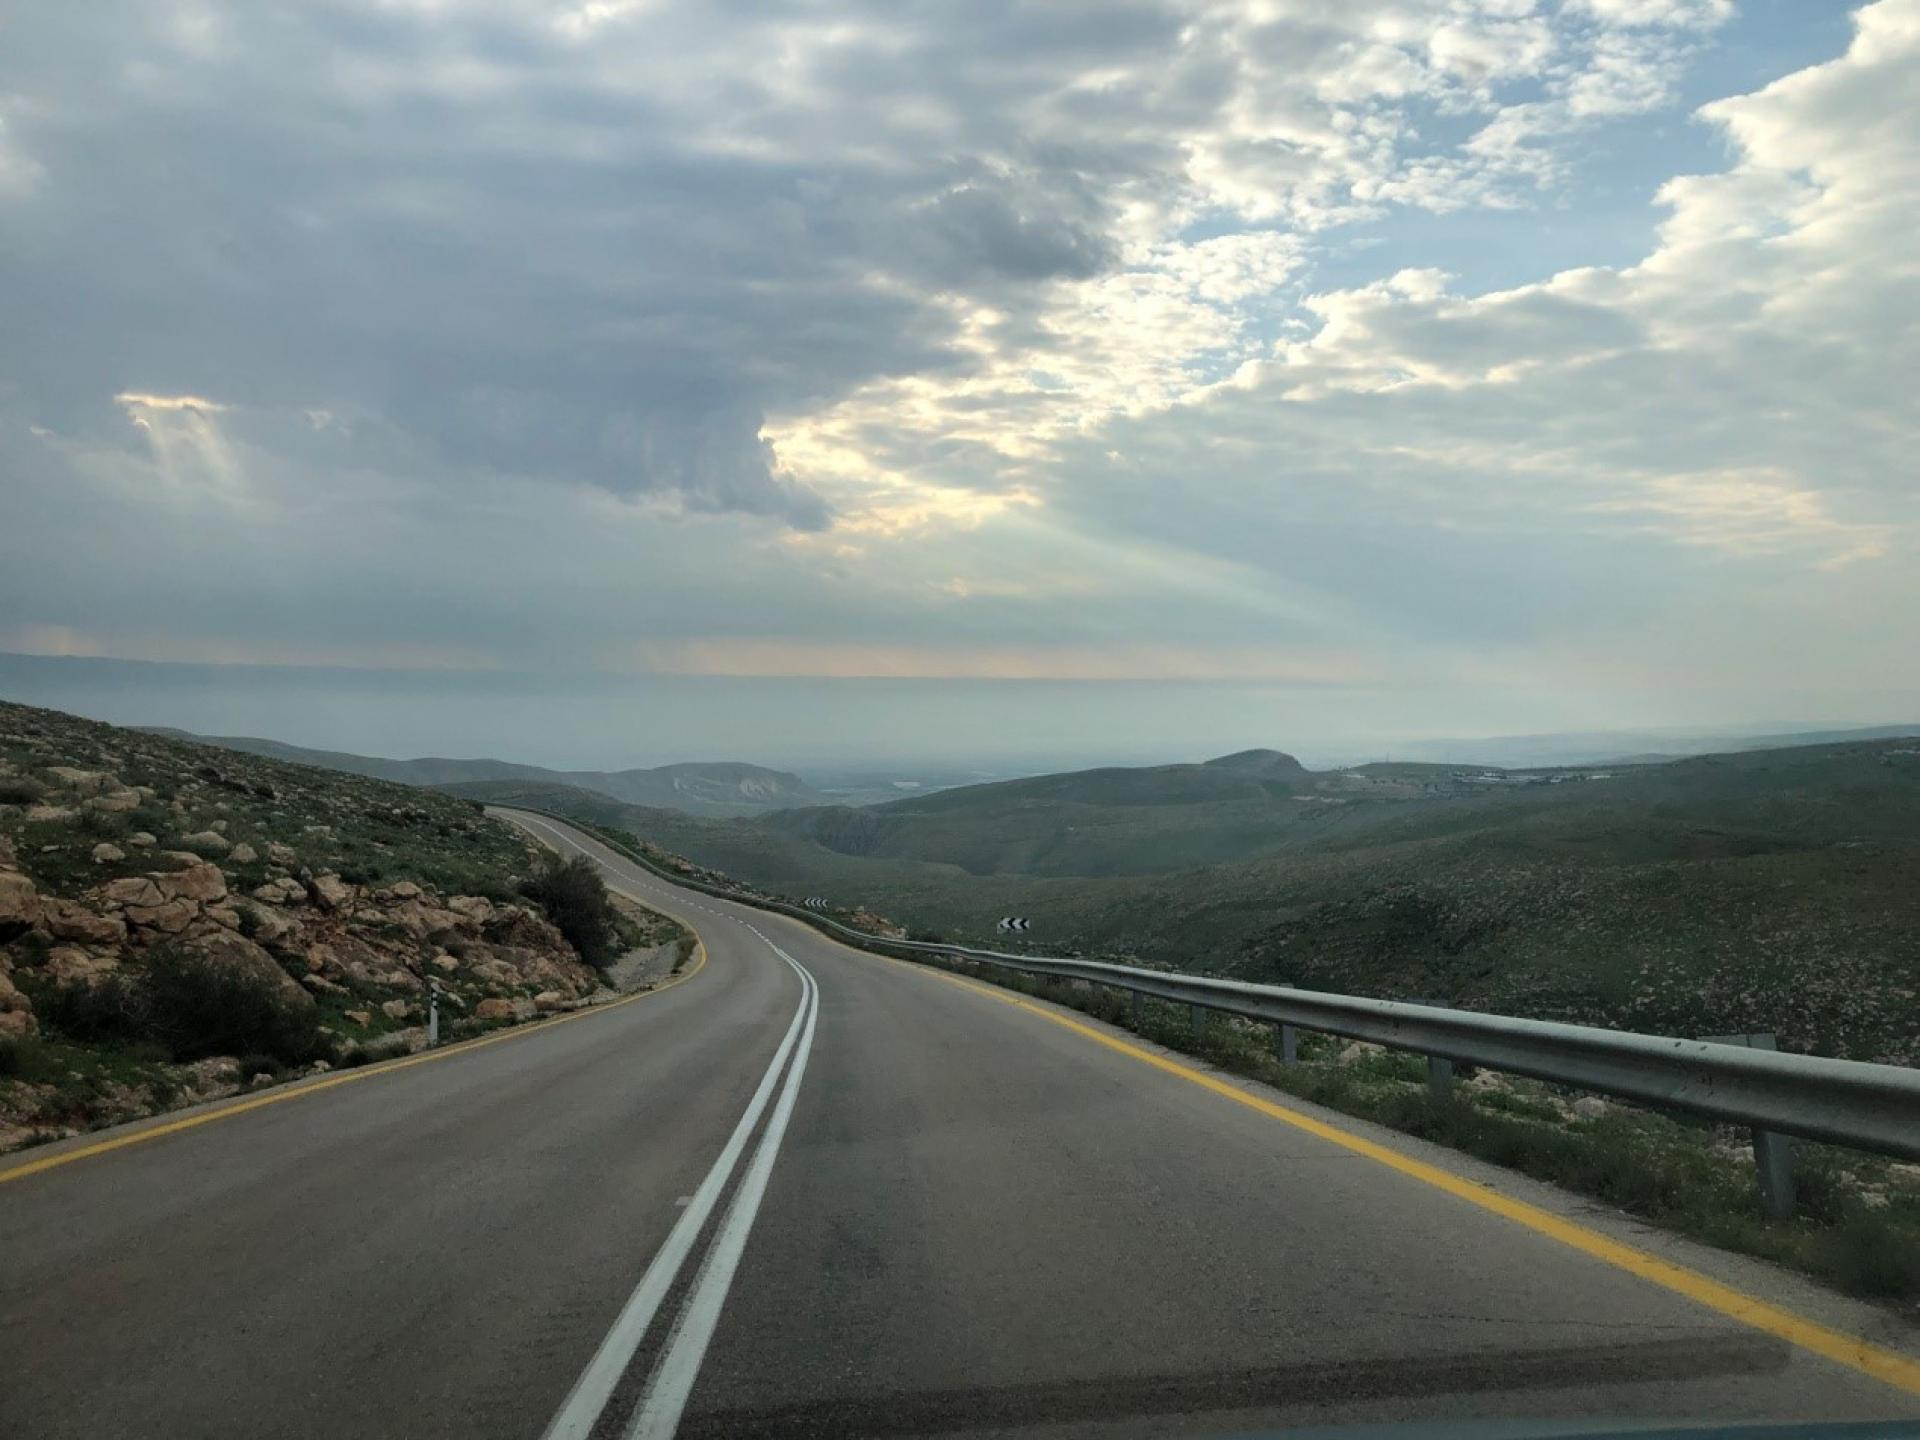  The beautiful Jordan valley in this season.